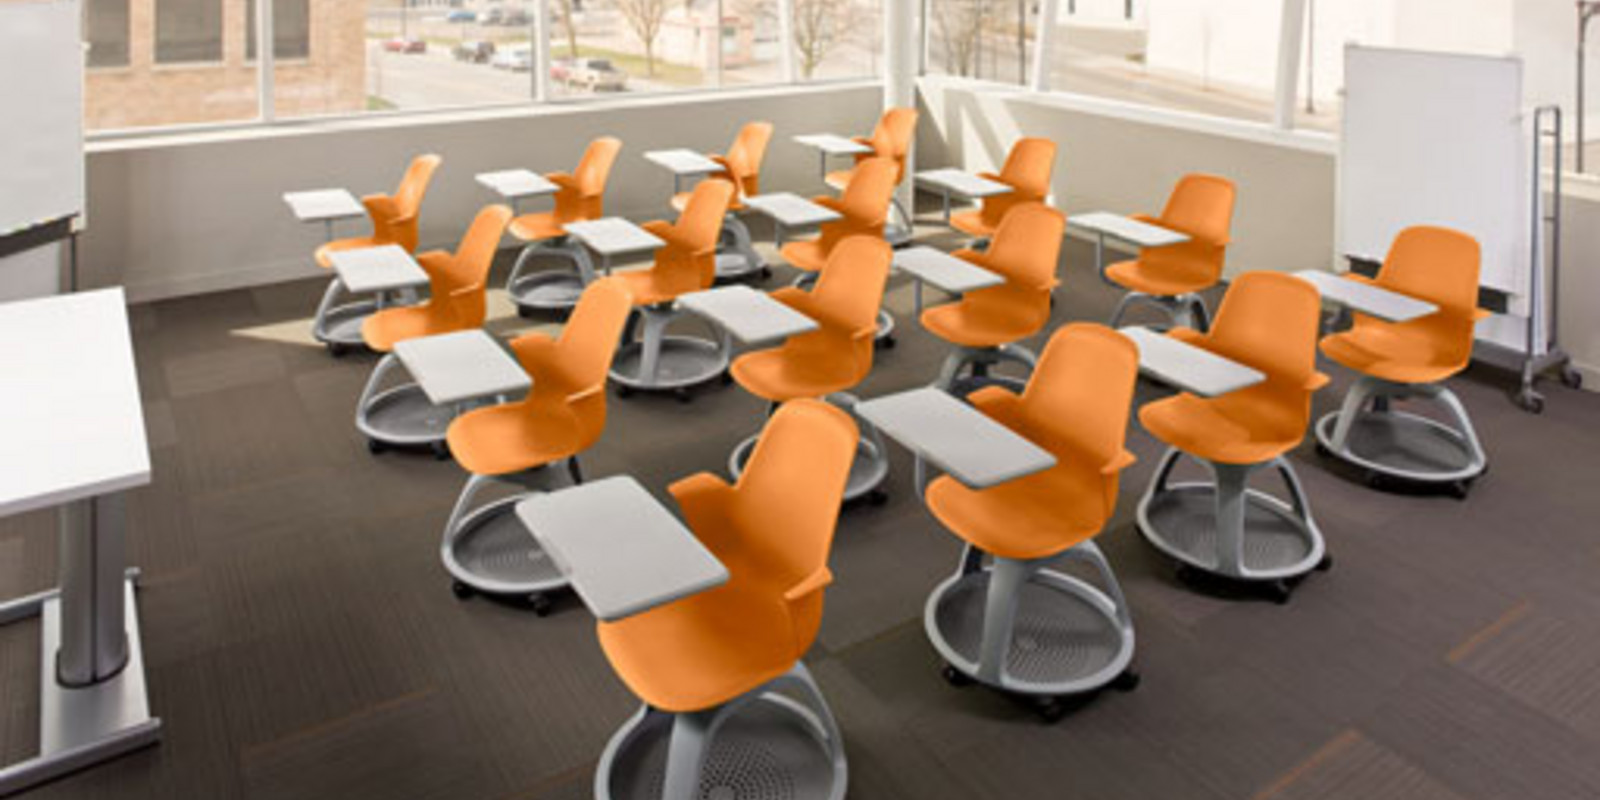 Steelcase - Stuhl "node" macht Klassenräume flexibel Bild 1